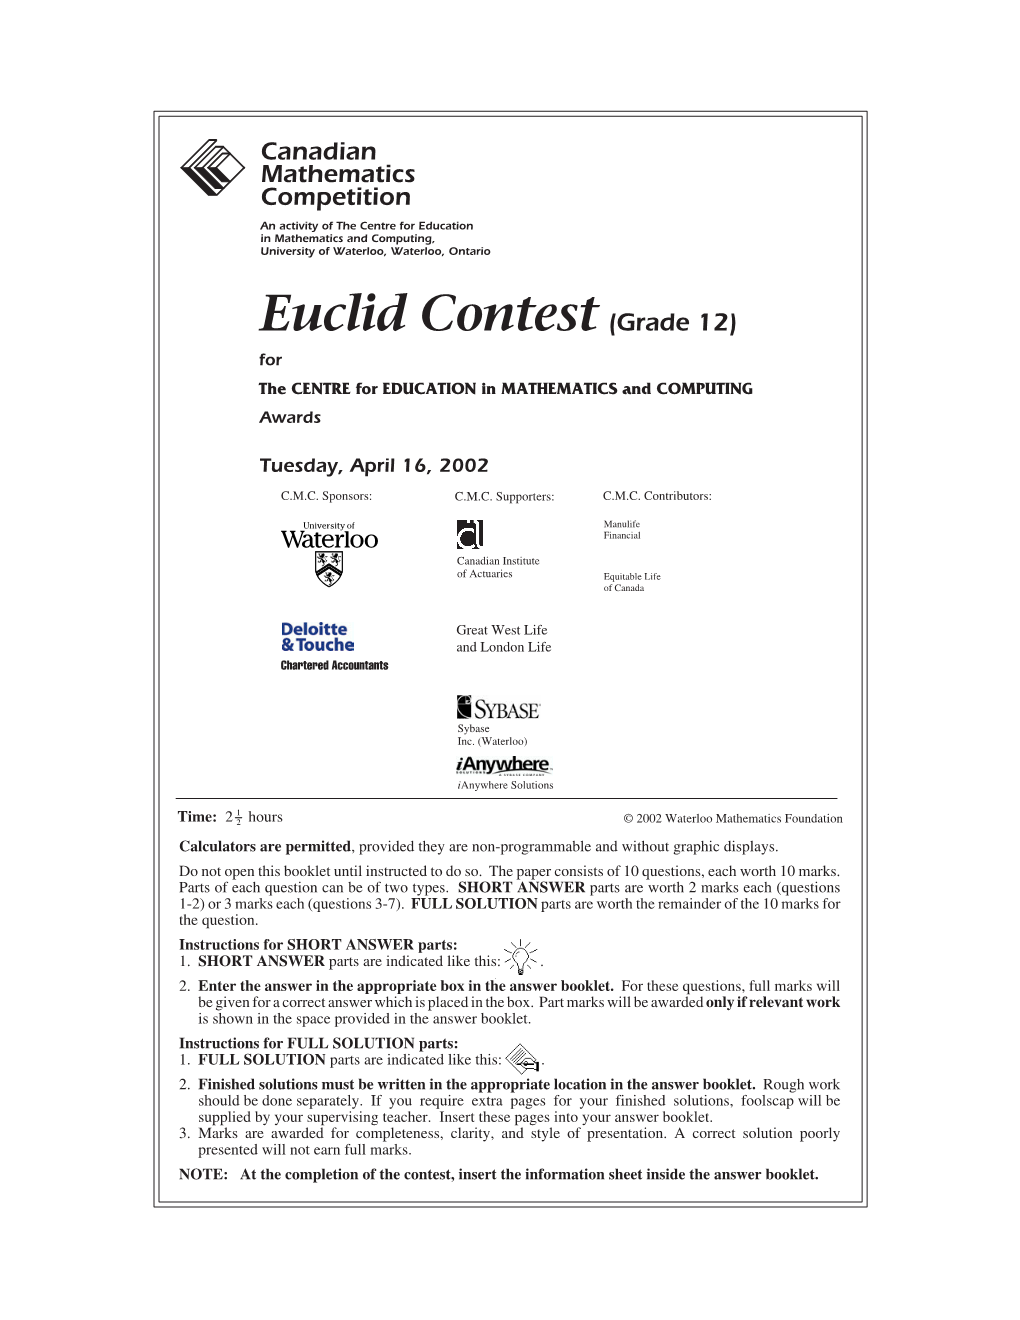 2002 Euclid Contest